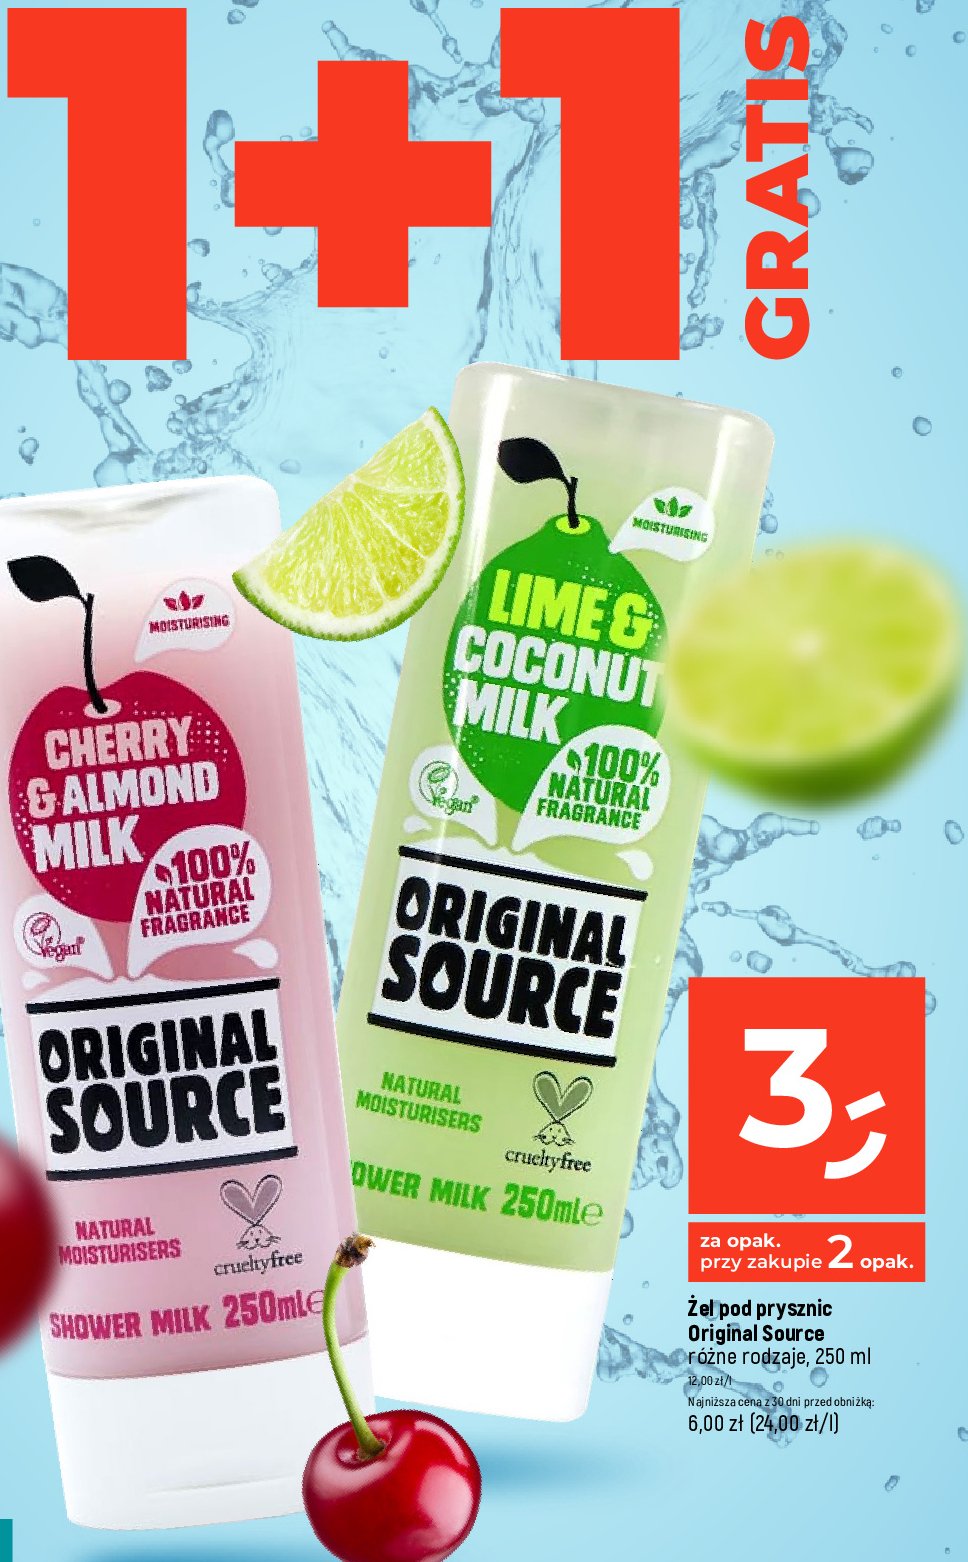 Żel pod prysznic lime & coconut milk Original source promocja